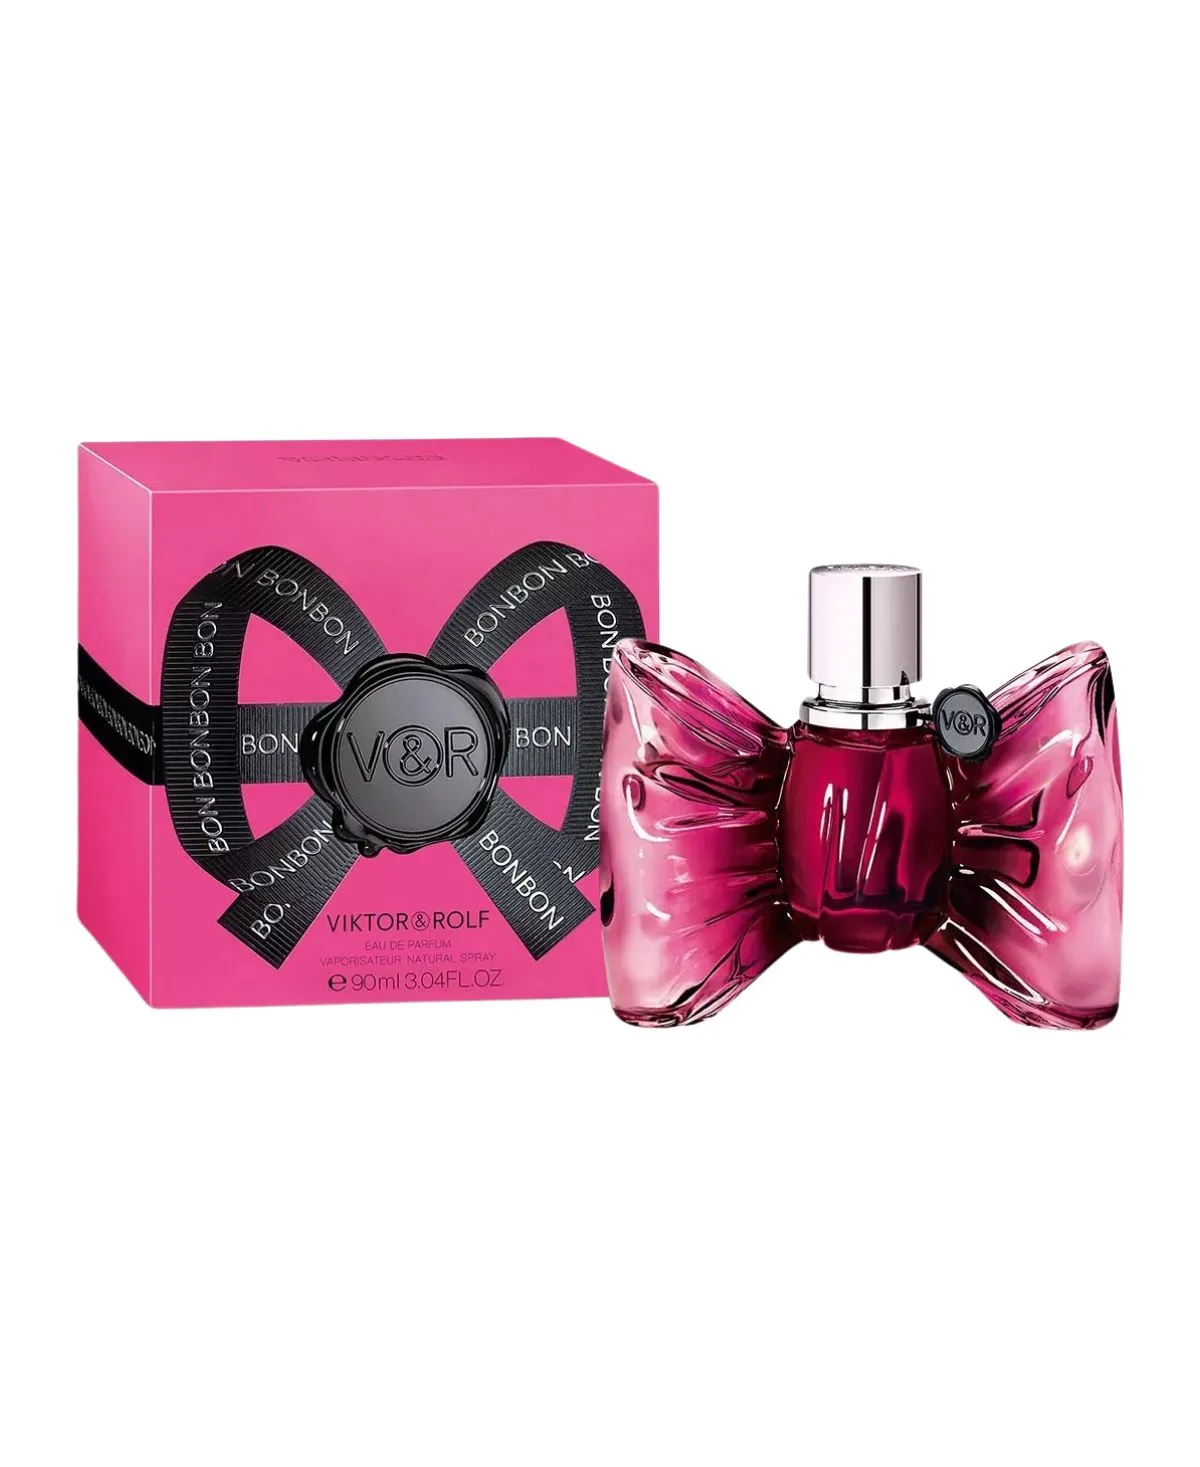 Viktor & Rolf Bonbon for Women Eau de Parfum (EDP) Spray 3 oz (90 ml) 3605521879721